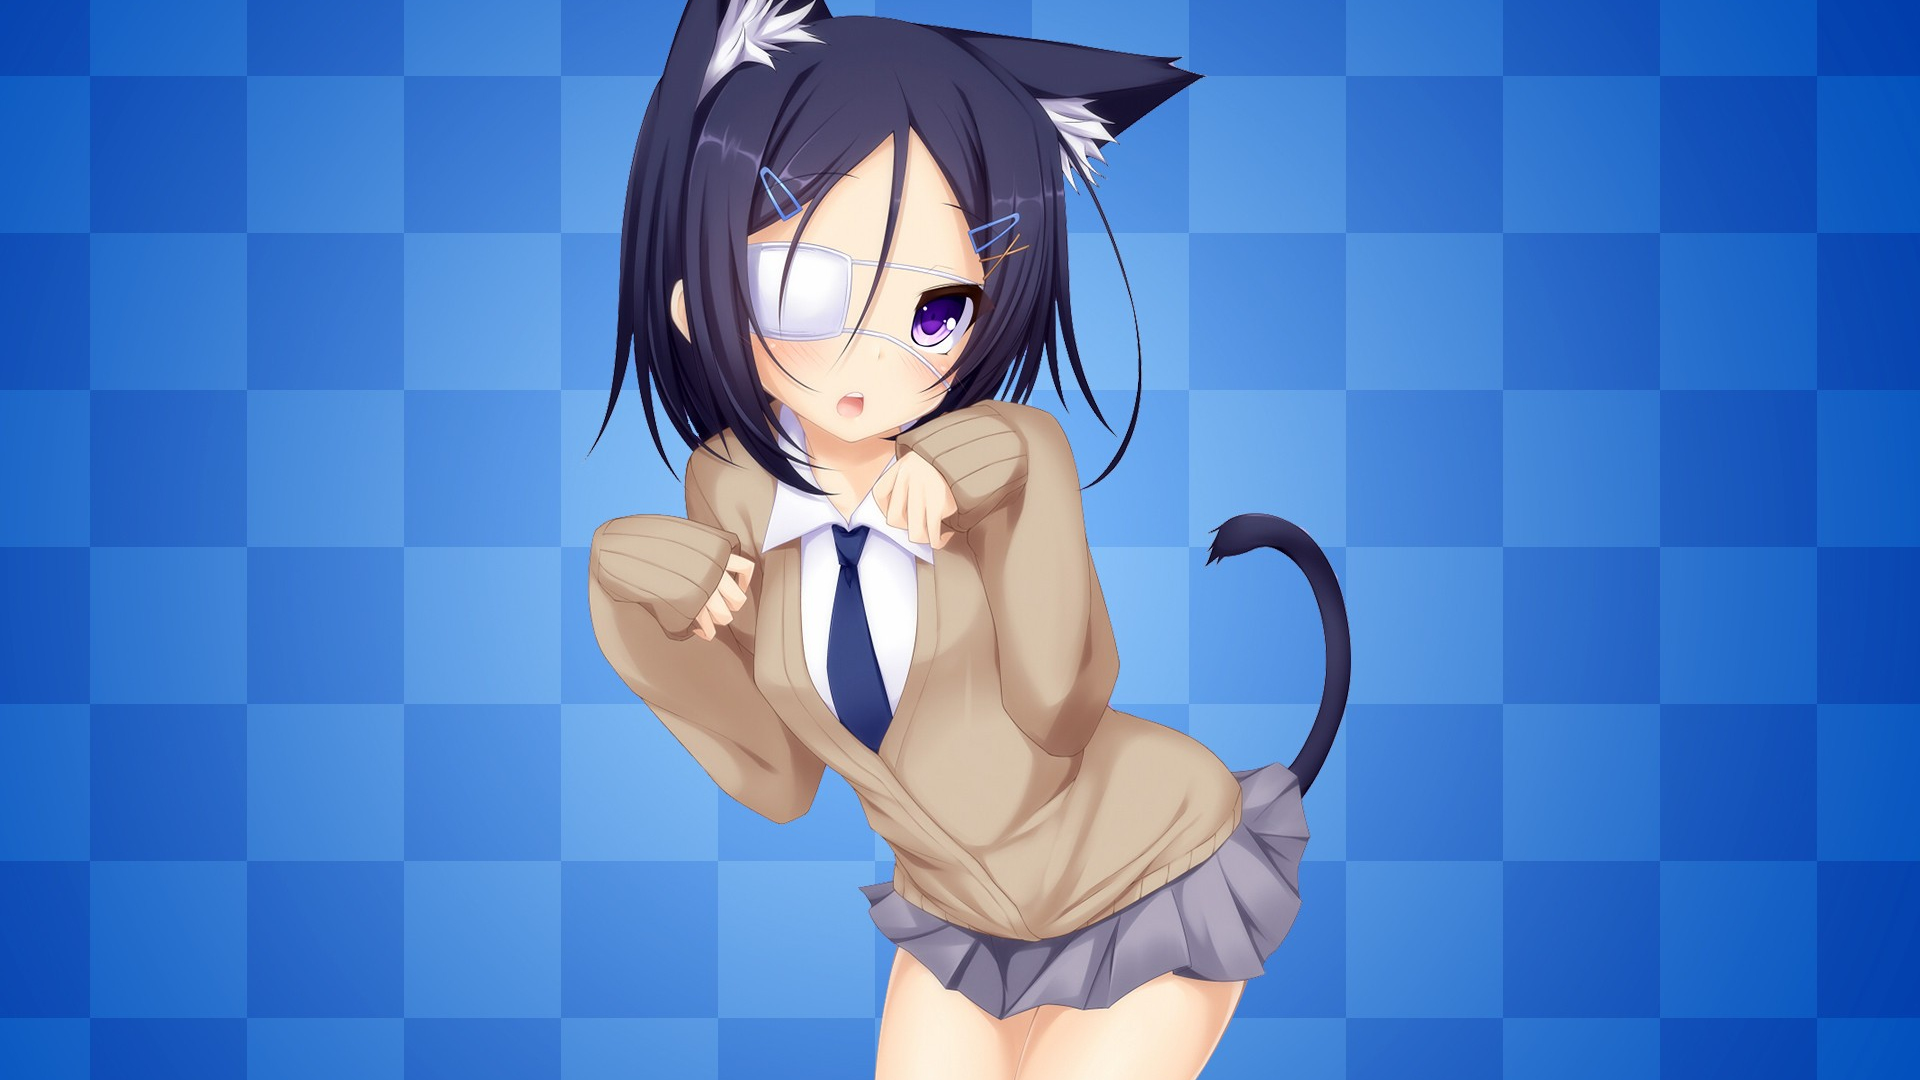 Download 1920x1080 Wallpaper Anime Cat Girl Full Hd Hdtv Fhd 1080p 1920x1080 Hd Image 4133